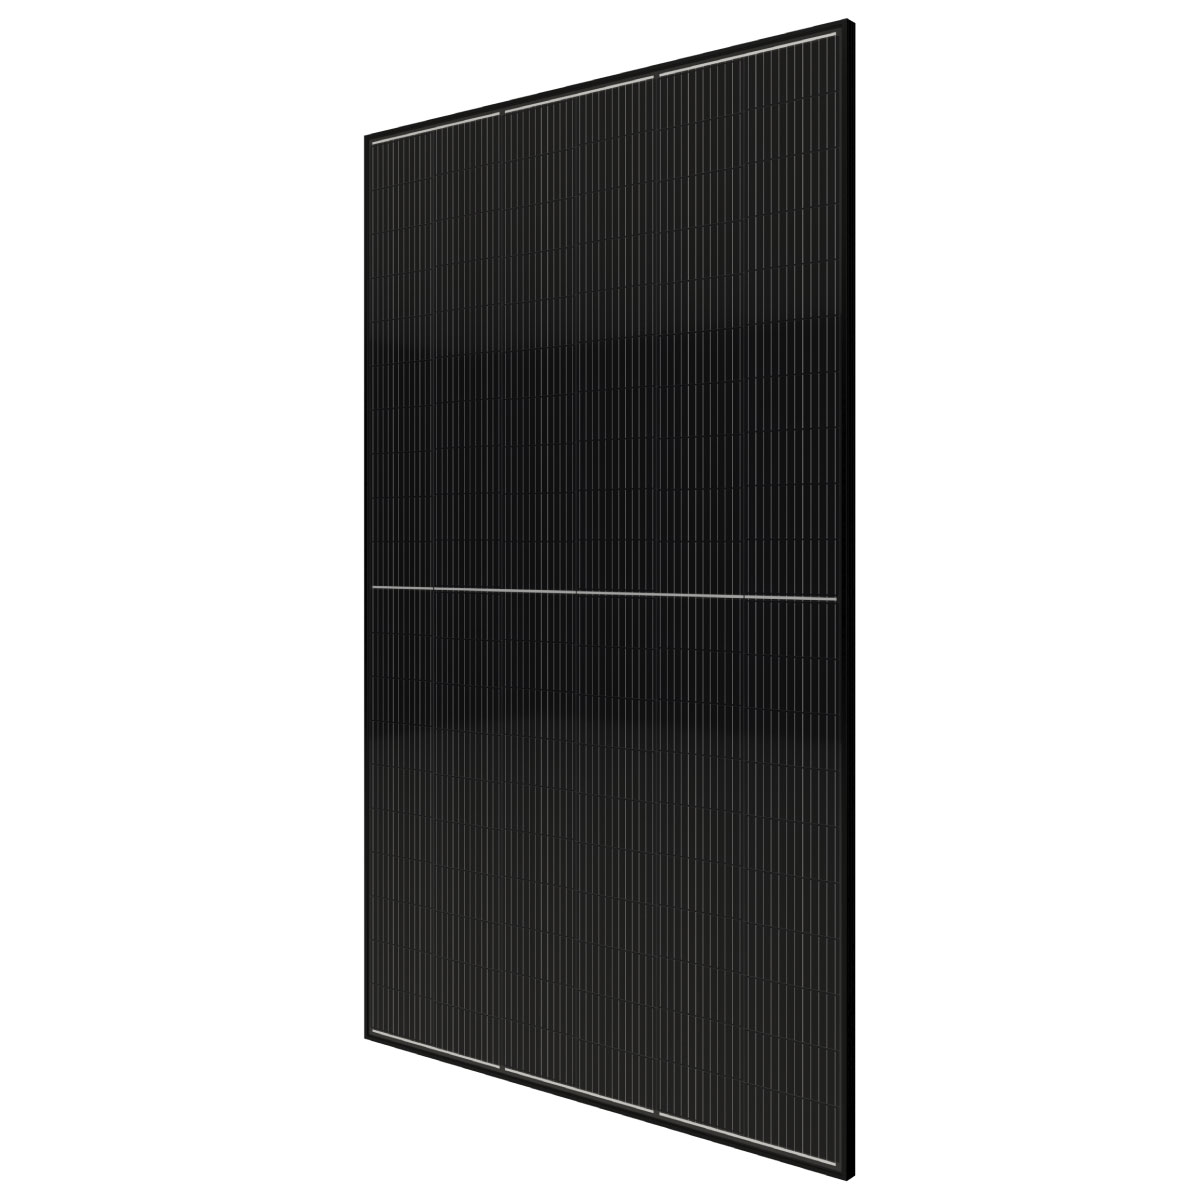 TommaTech 605Wp 120PM M12 Full Black Solar Panel